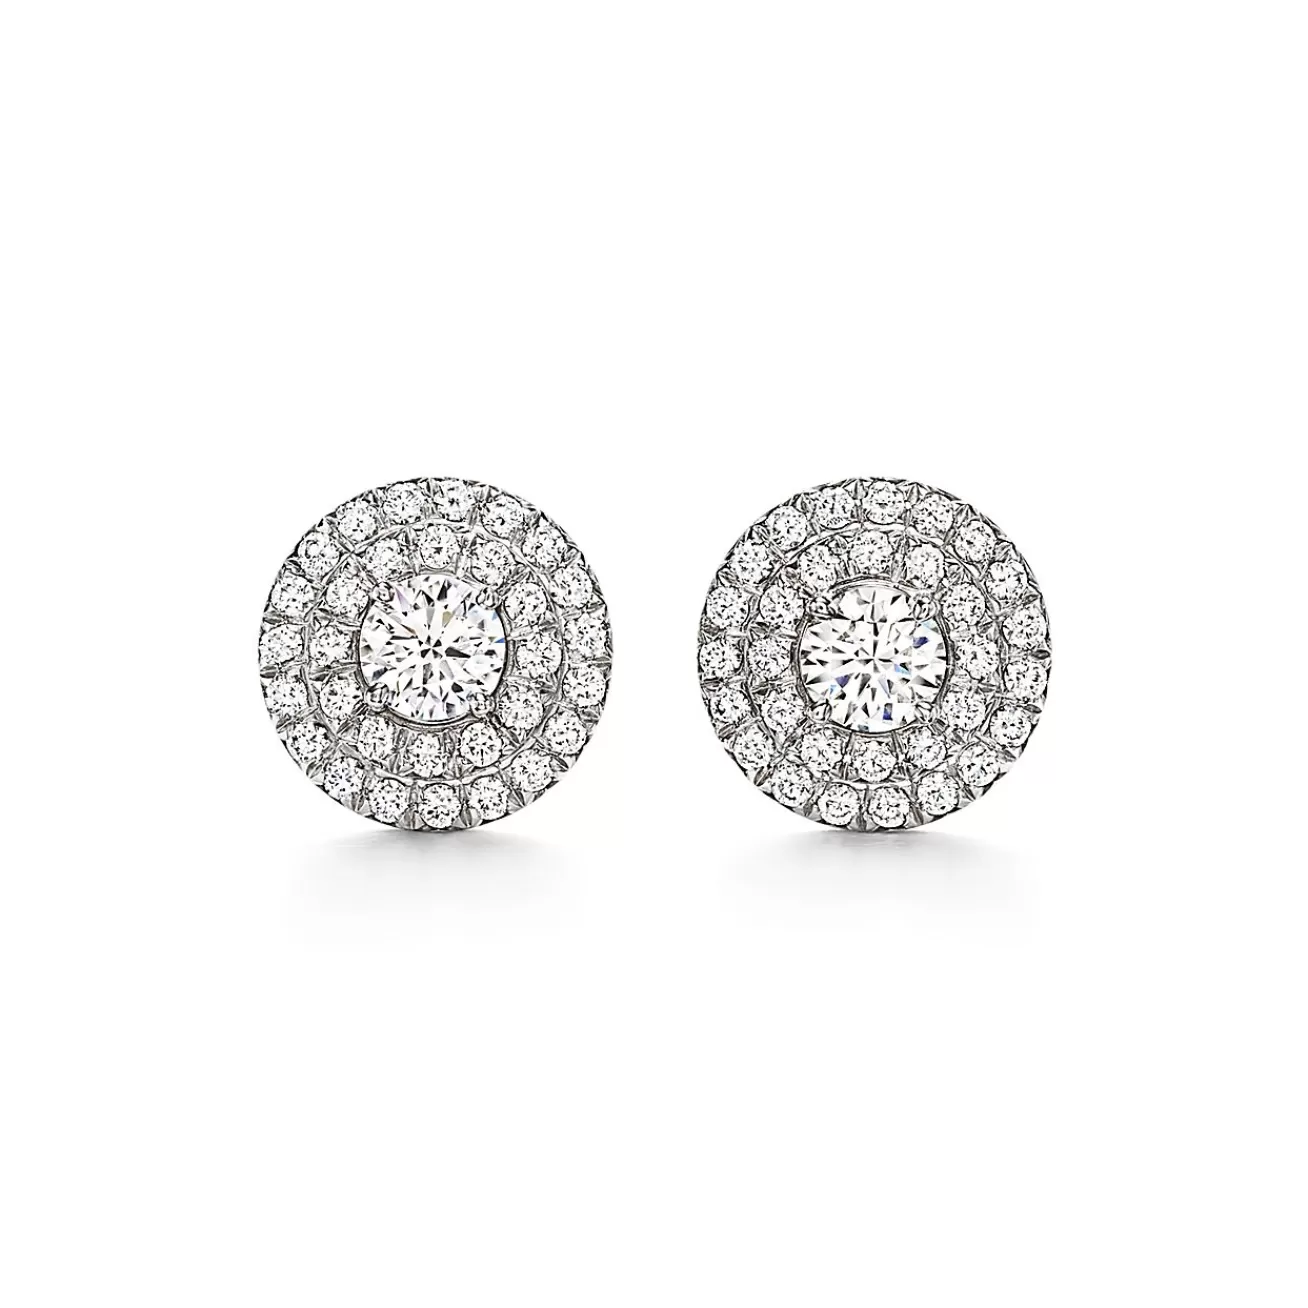 Tiffany & Co. Tiffany Soleste® earrings in platinum with round brilliant diamonds. | ^ Earrings | Dainty Jewelry